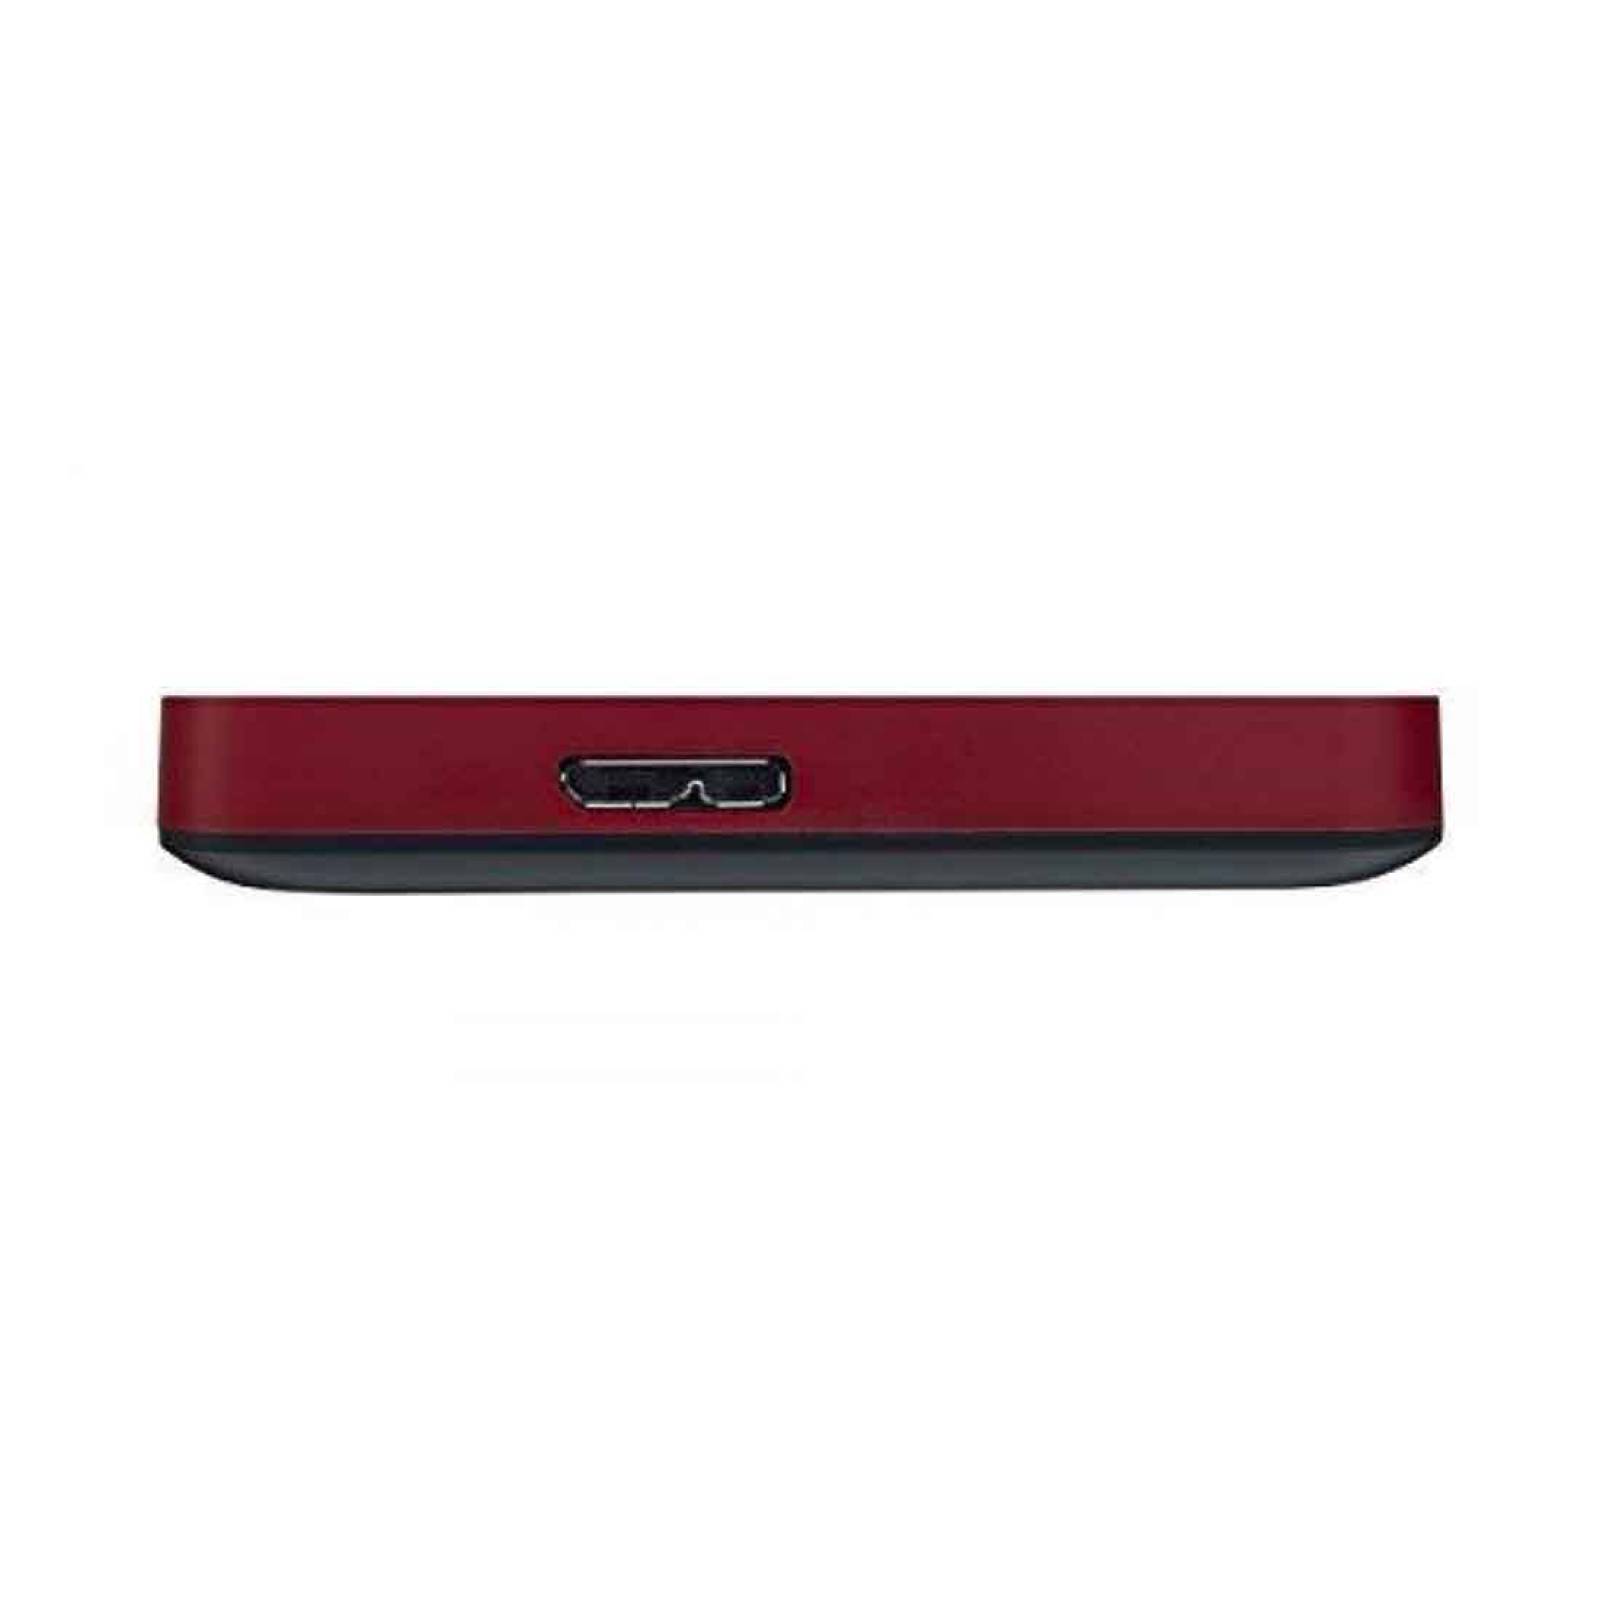 Disco Duro Externo Toshiba Canvio Portátil 1TB Advance Rojo